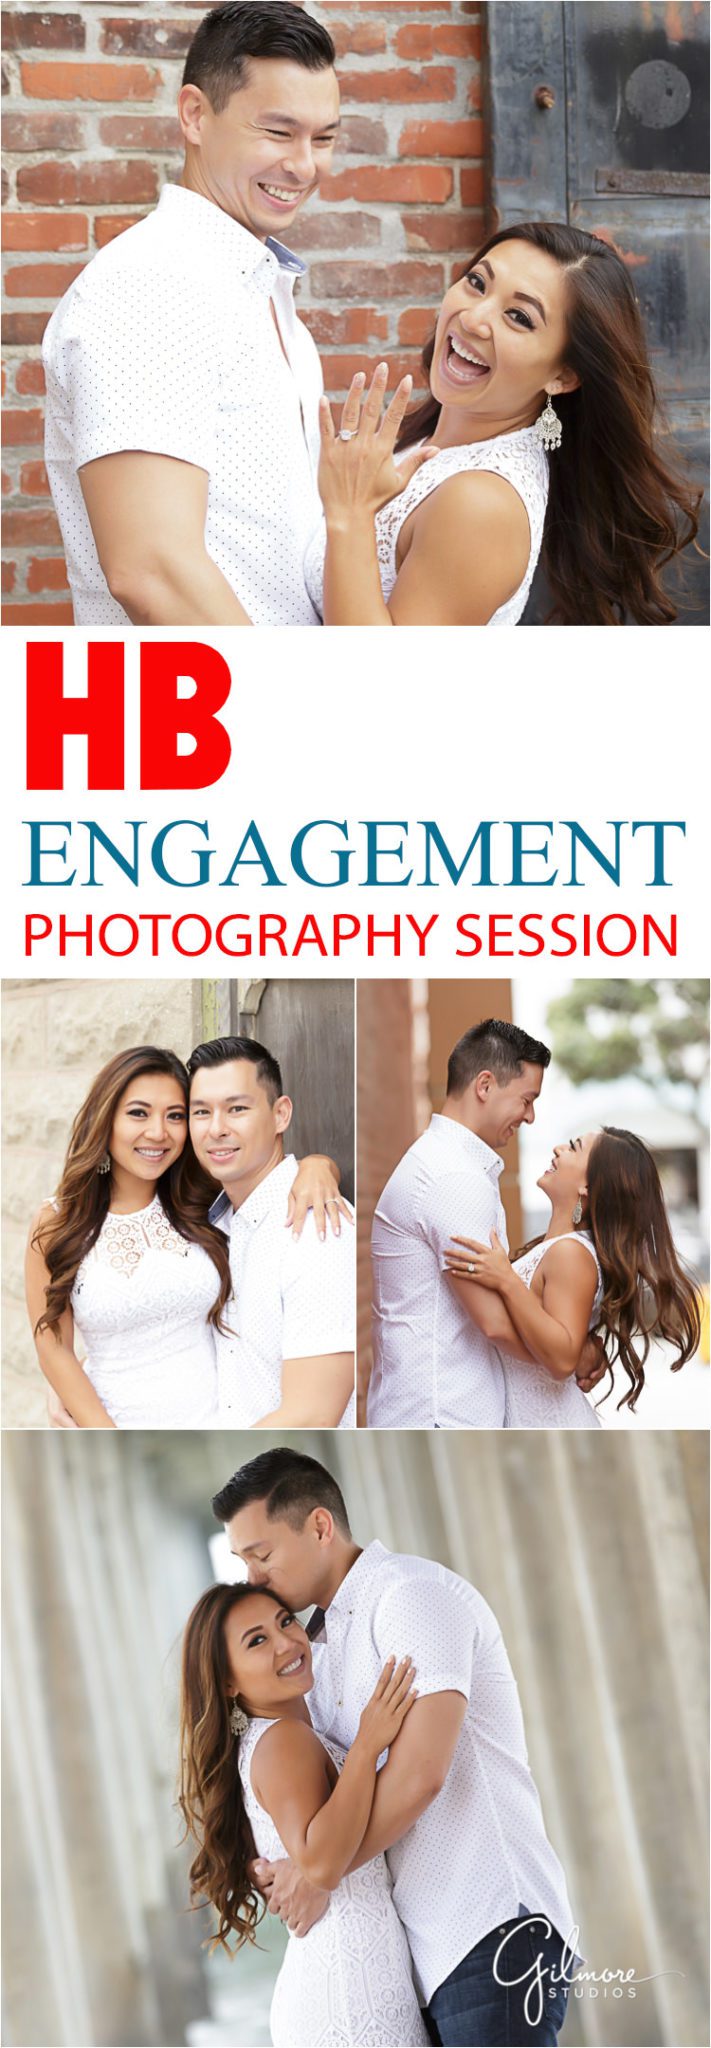 HB engagement photographer